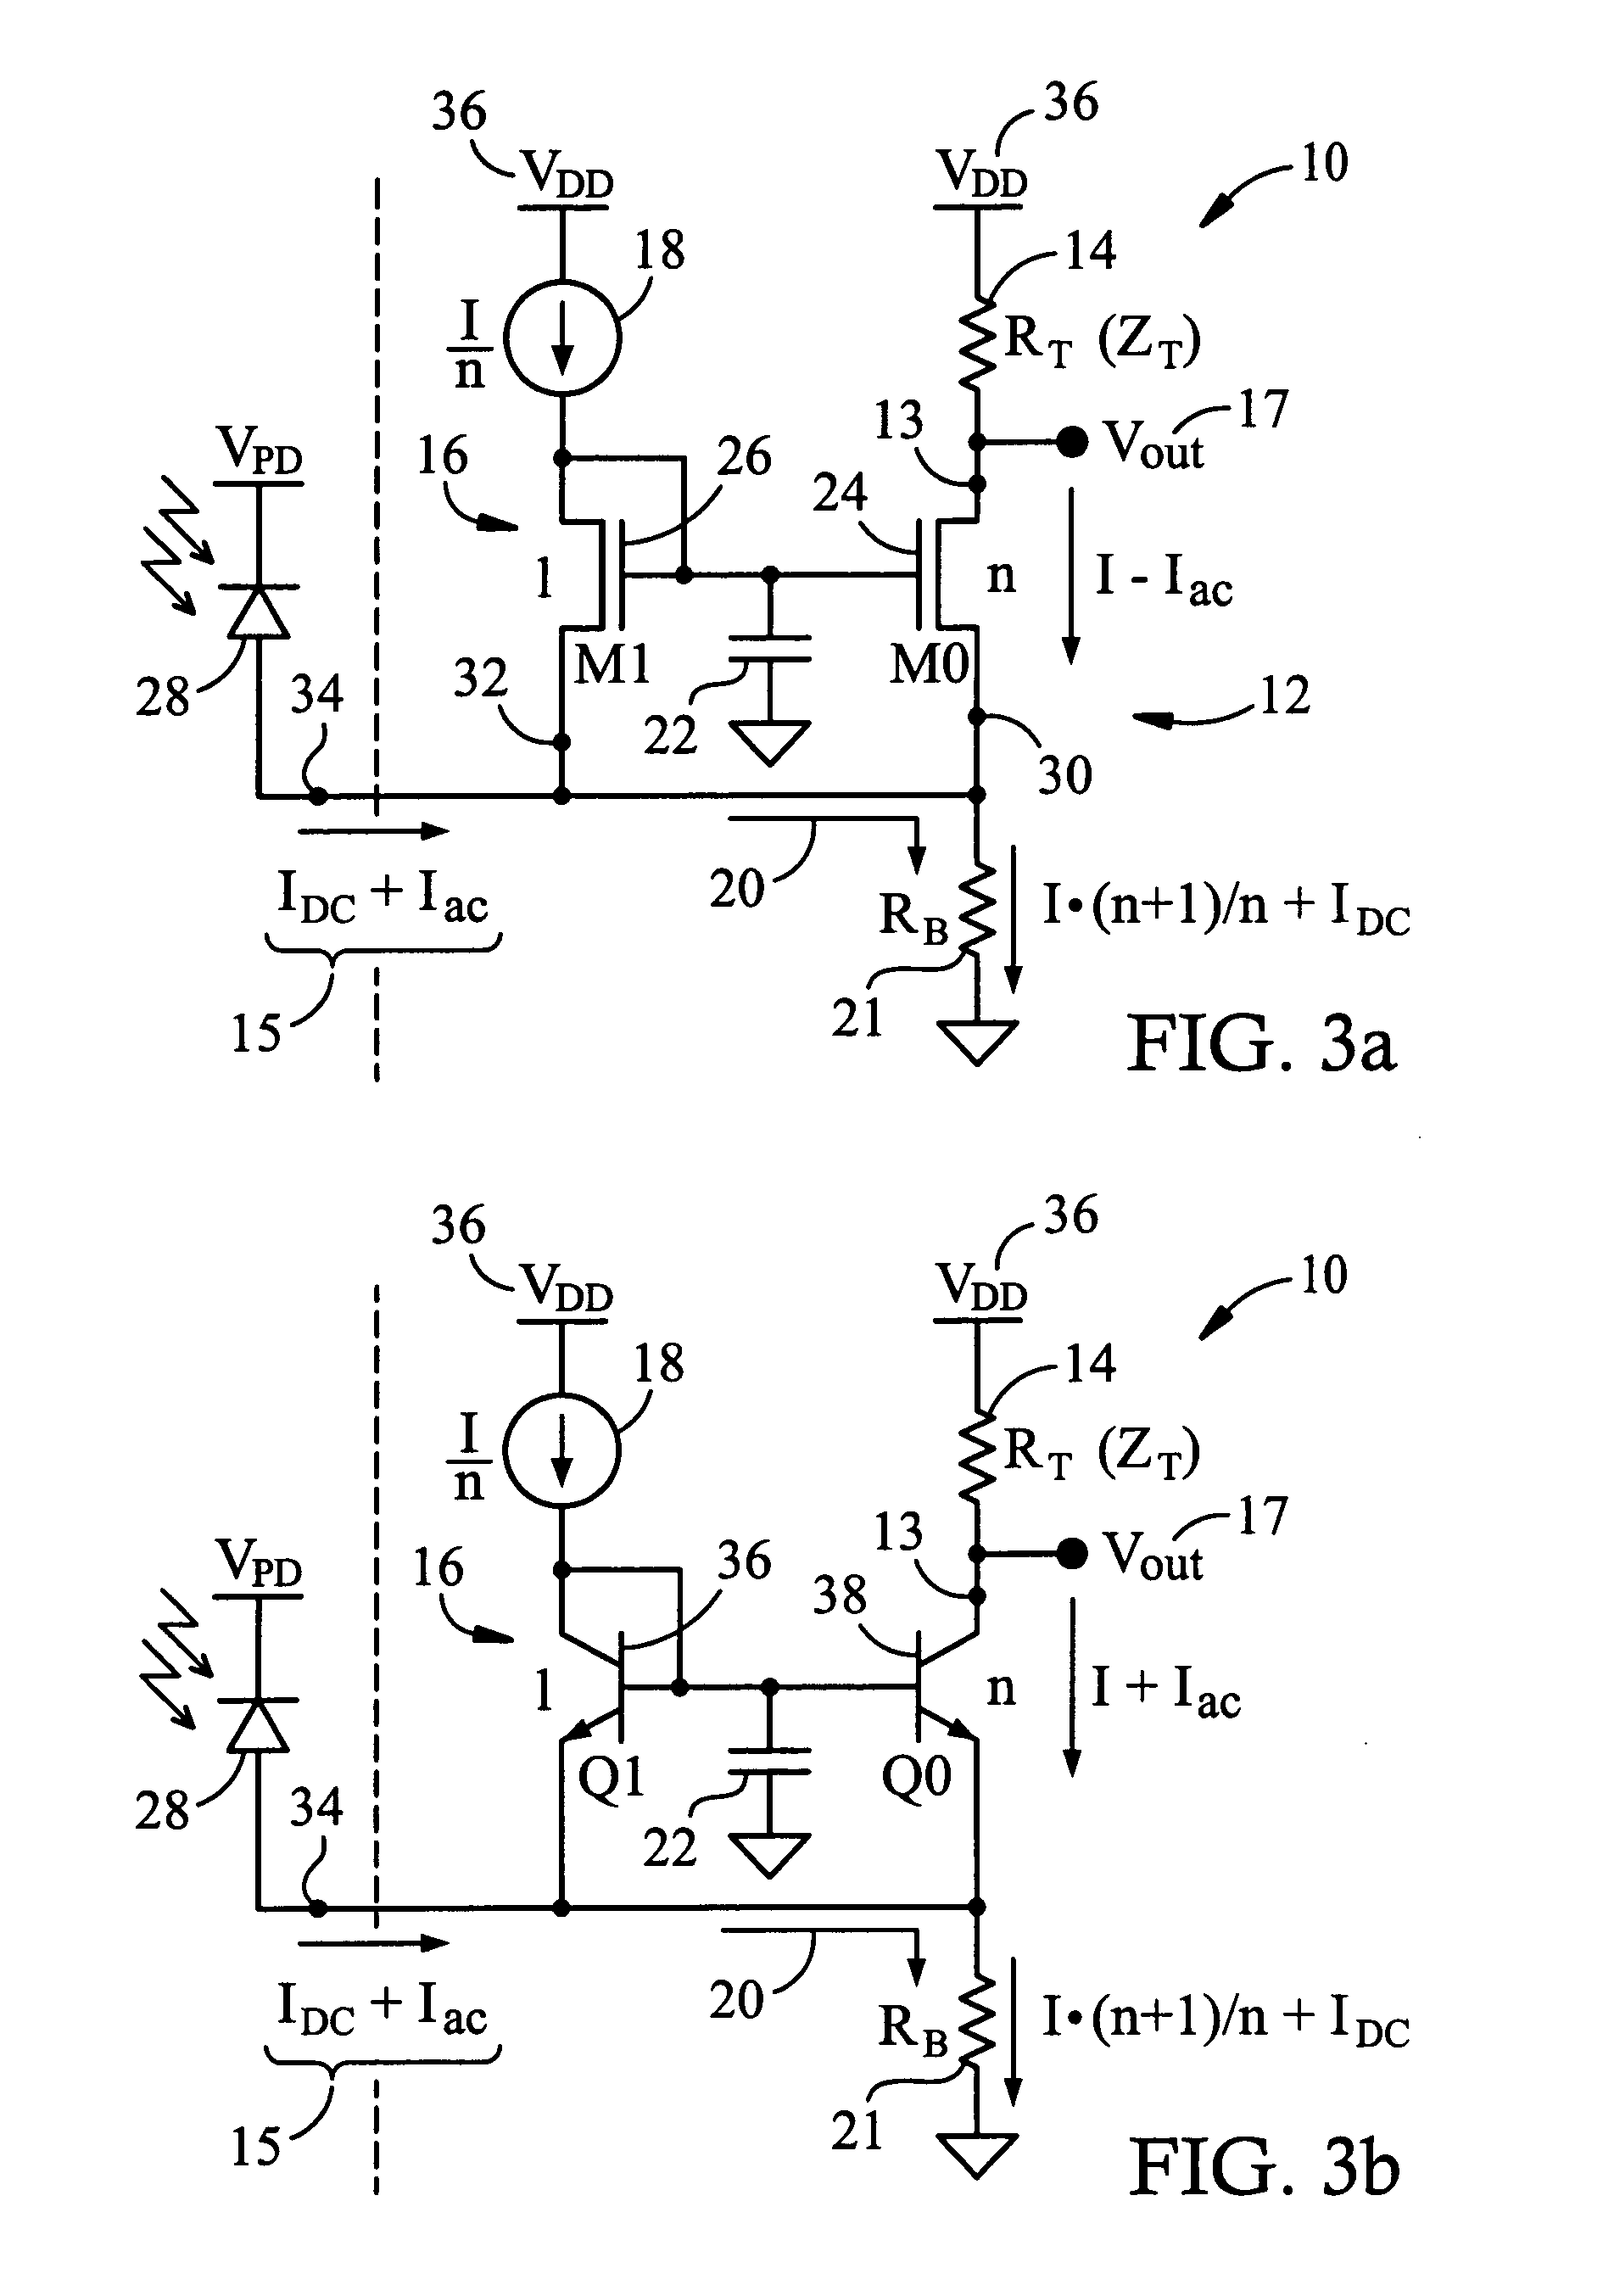 Low-voltage, low-power transimpedance amplifier architecture